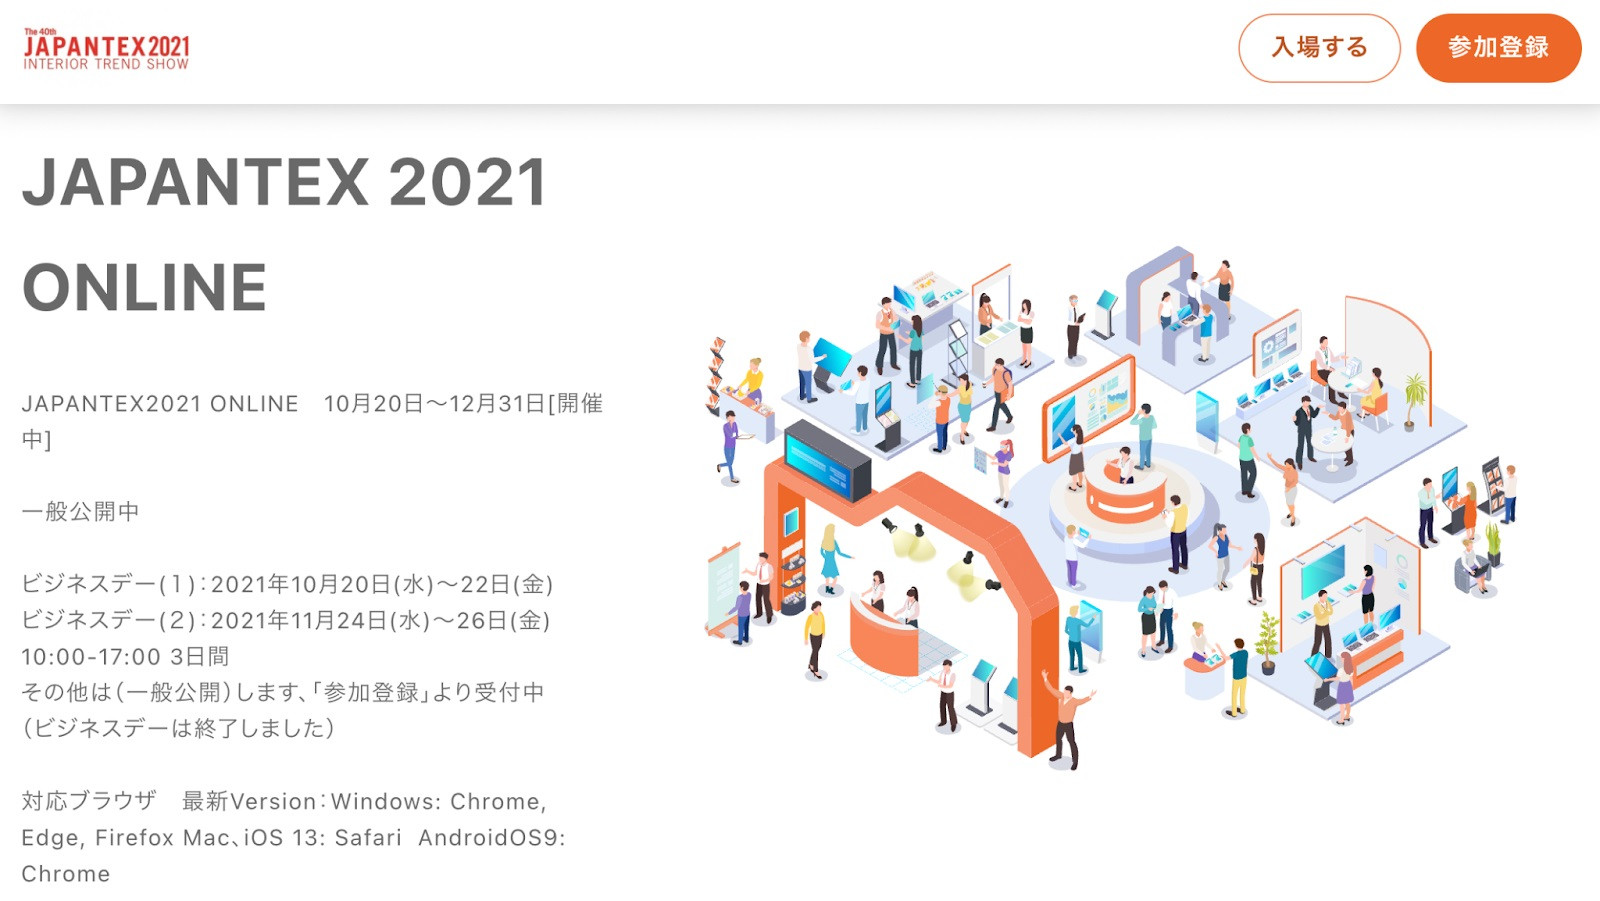 JAPANTEX 2021 ONLINE